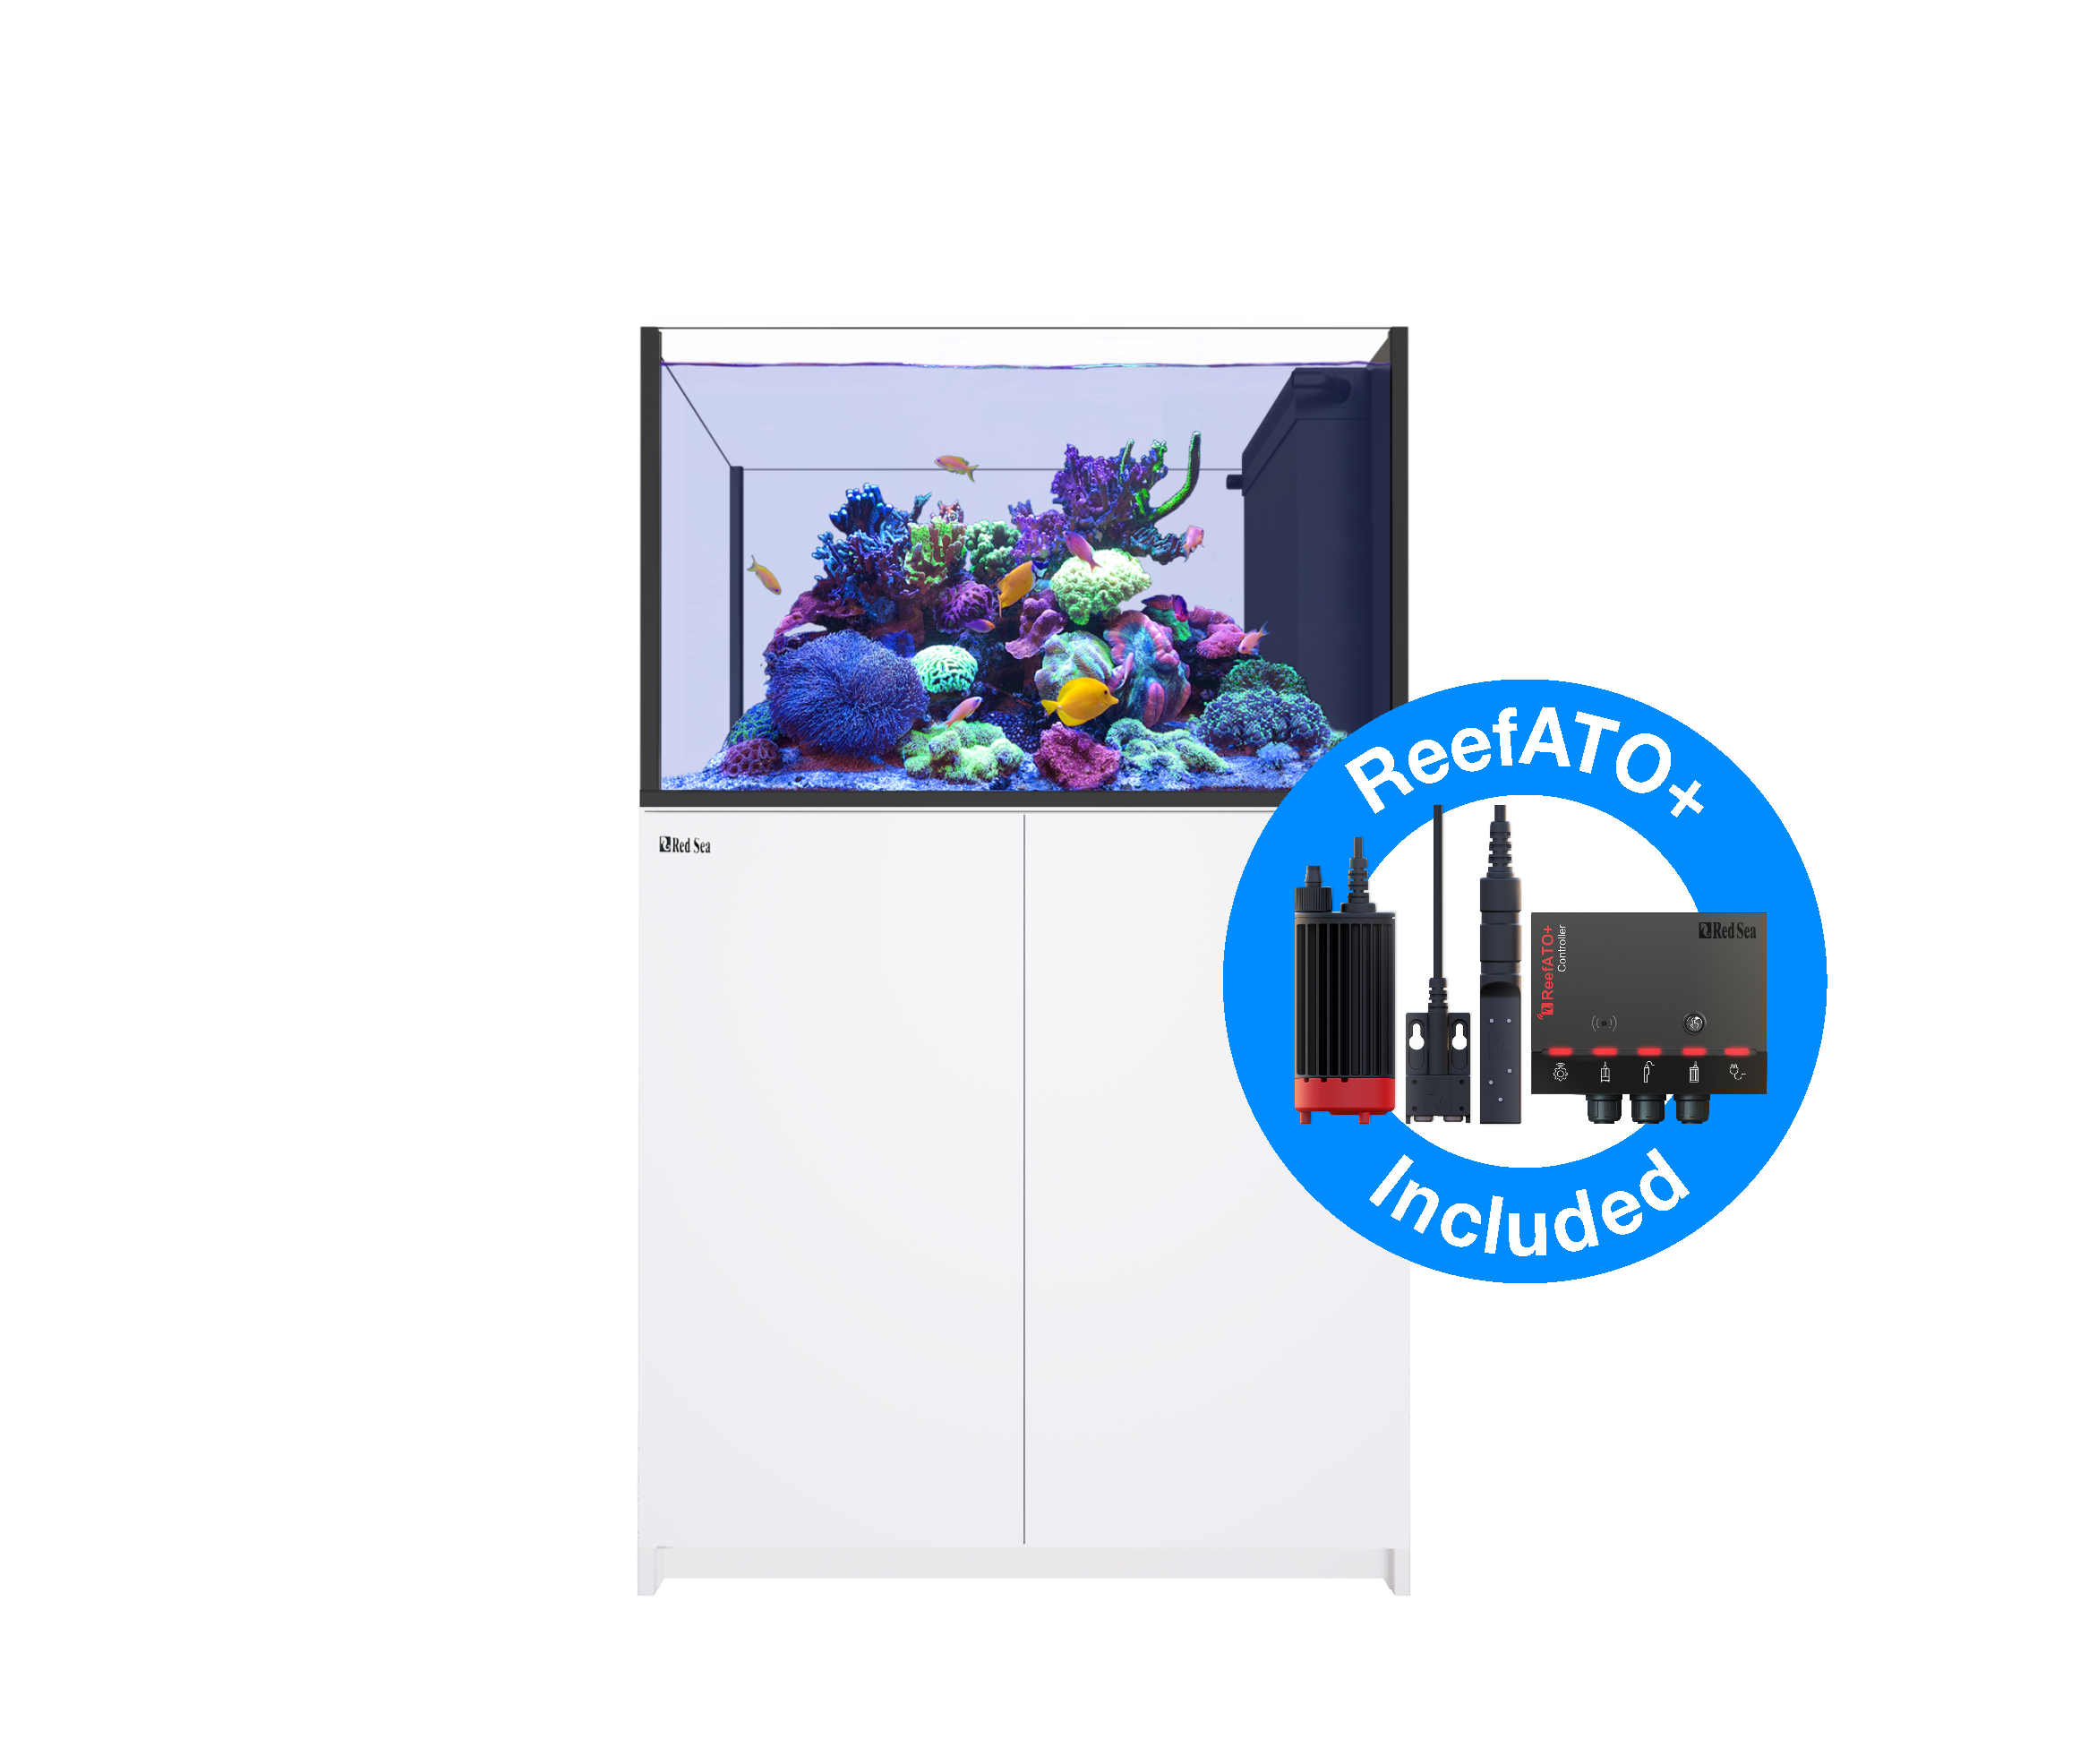 Red Sea Reefer G2+ 350 Deluxe Peninsula Aquarium - White (2 x ReefLED 90)